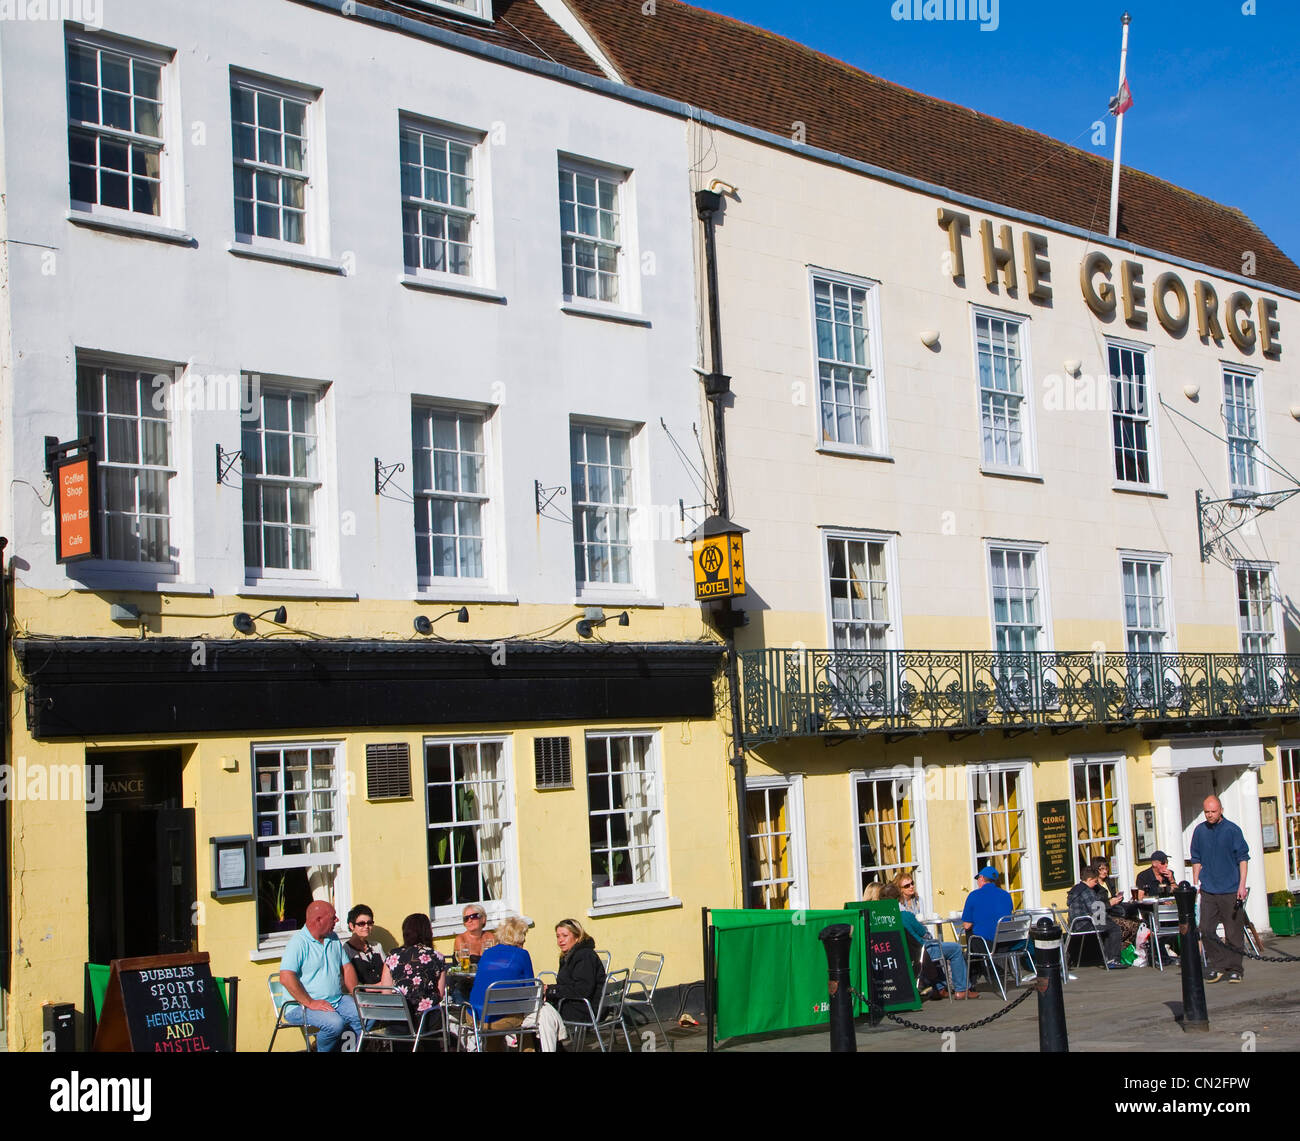 George Hotel pub Colchester Essex England Stock Photo